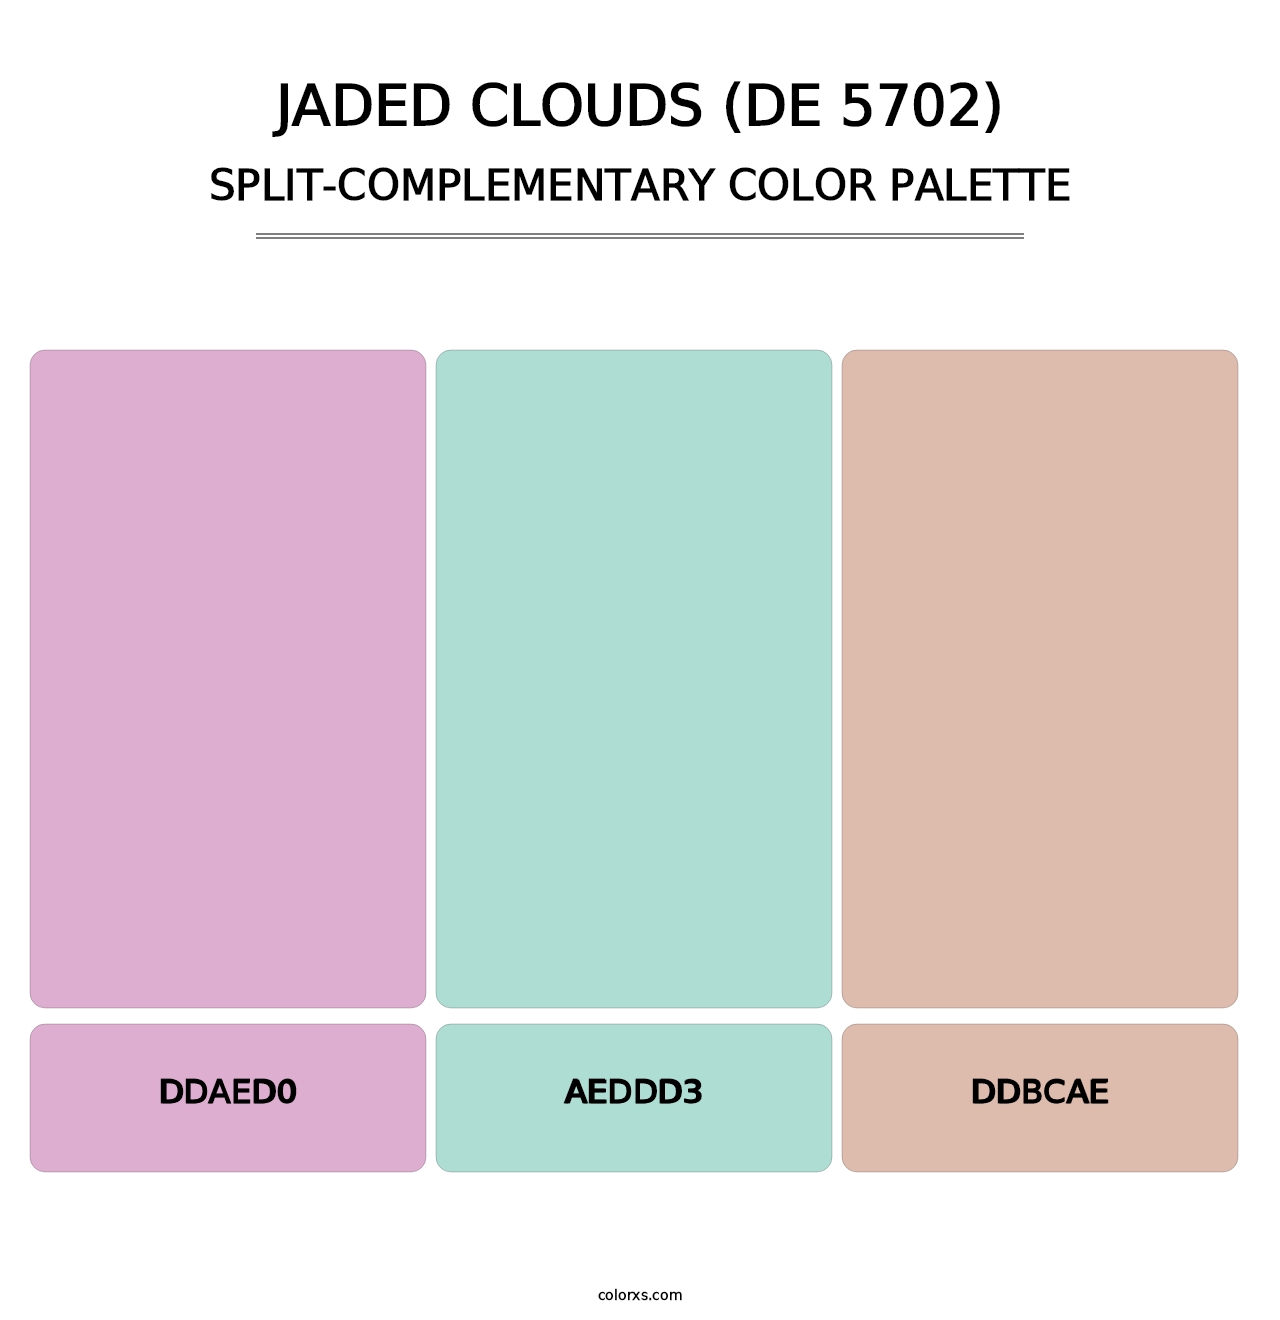 Jaded Clouds (DE 5702) - Split-Complementary Color Palette